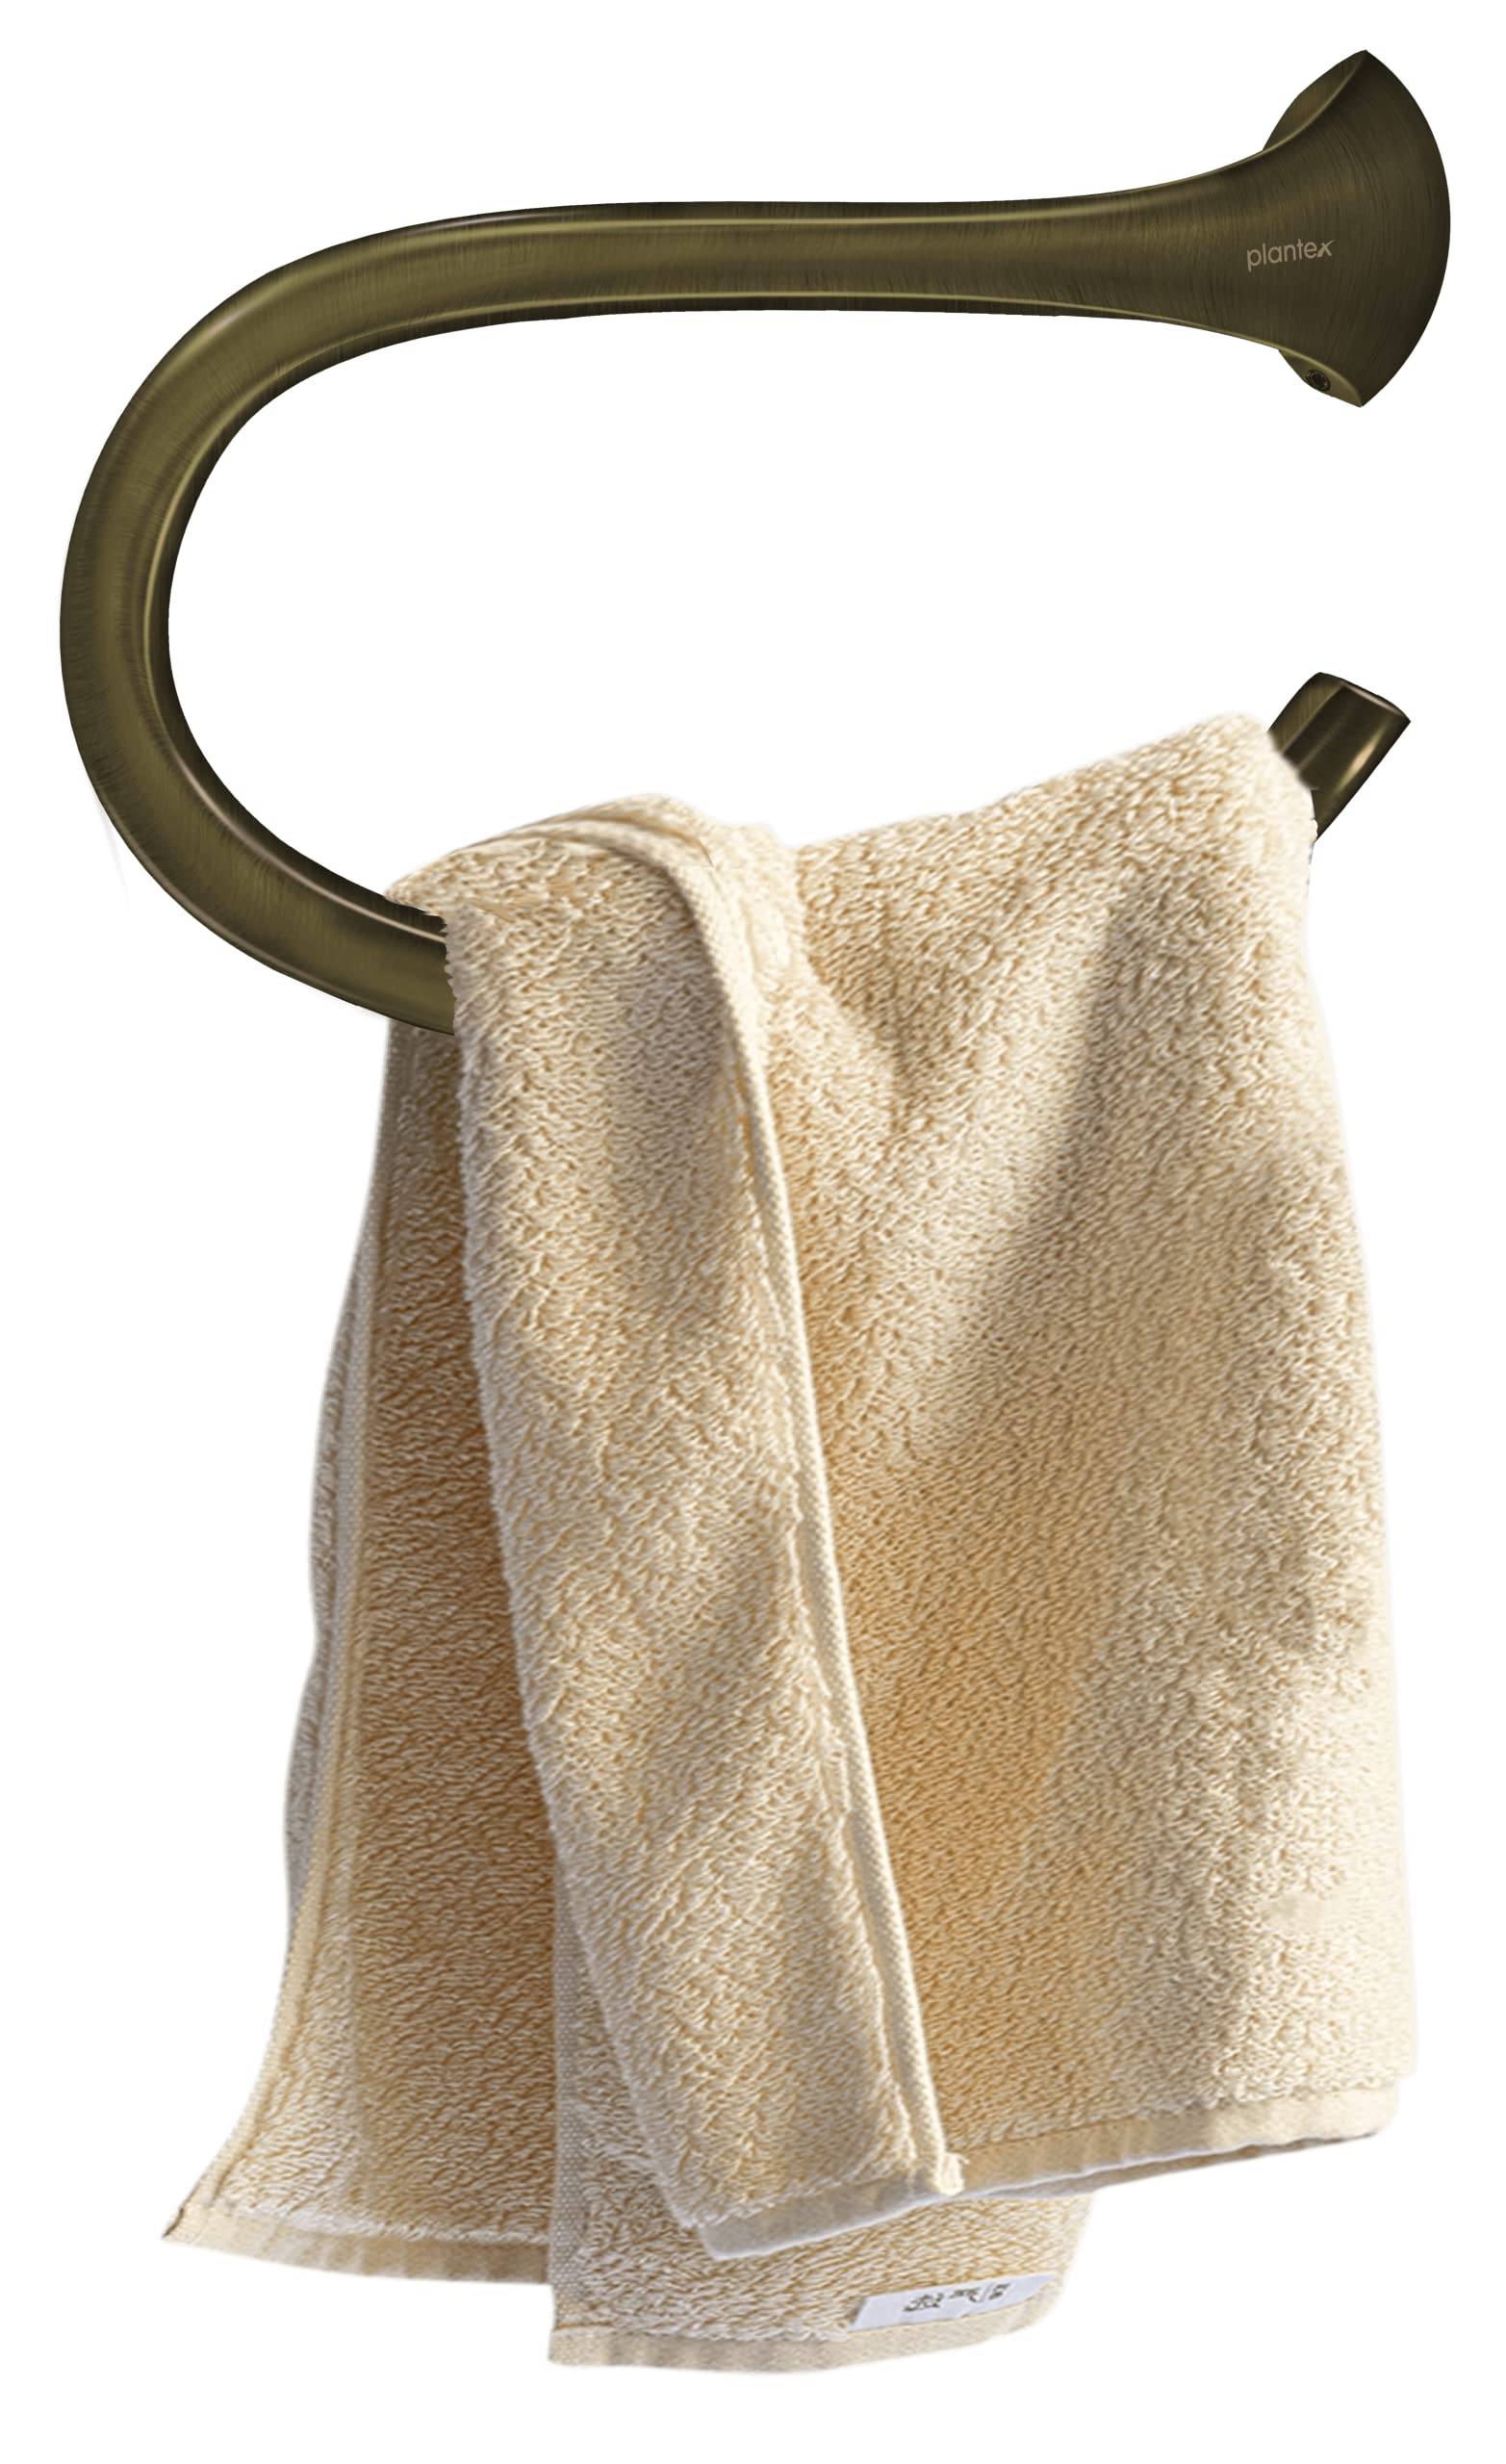 Plantex Fully Brass Made Napkin Holder for wash Basin Hand Towel Holder (Rich Antique)